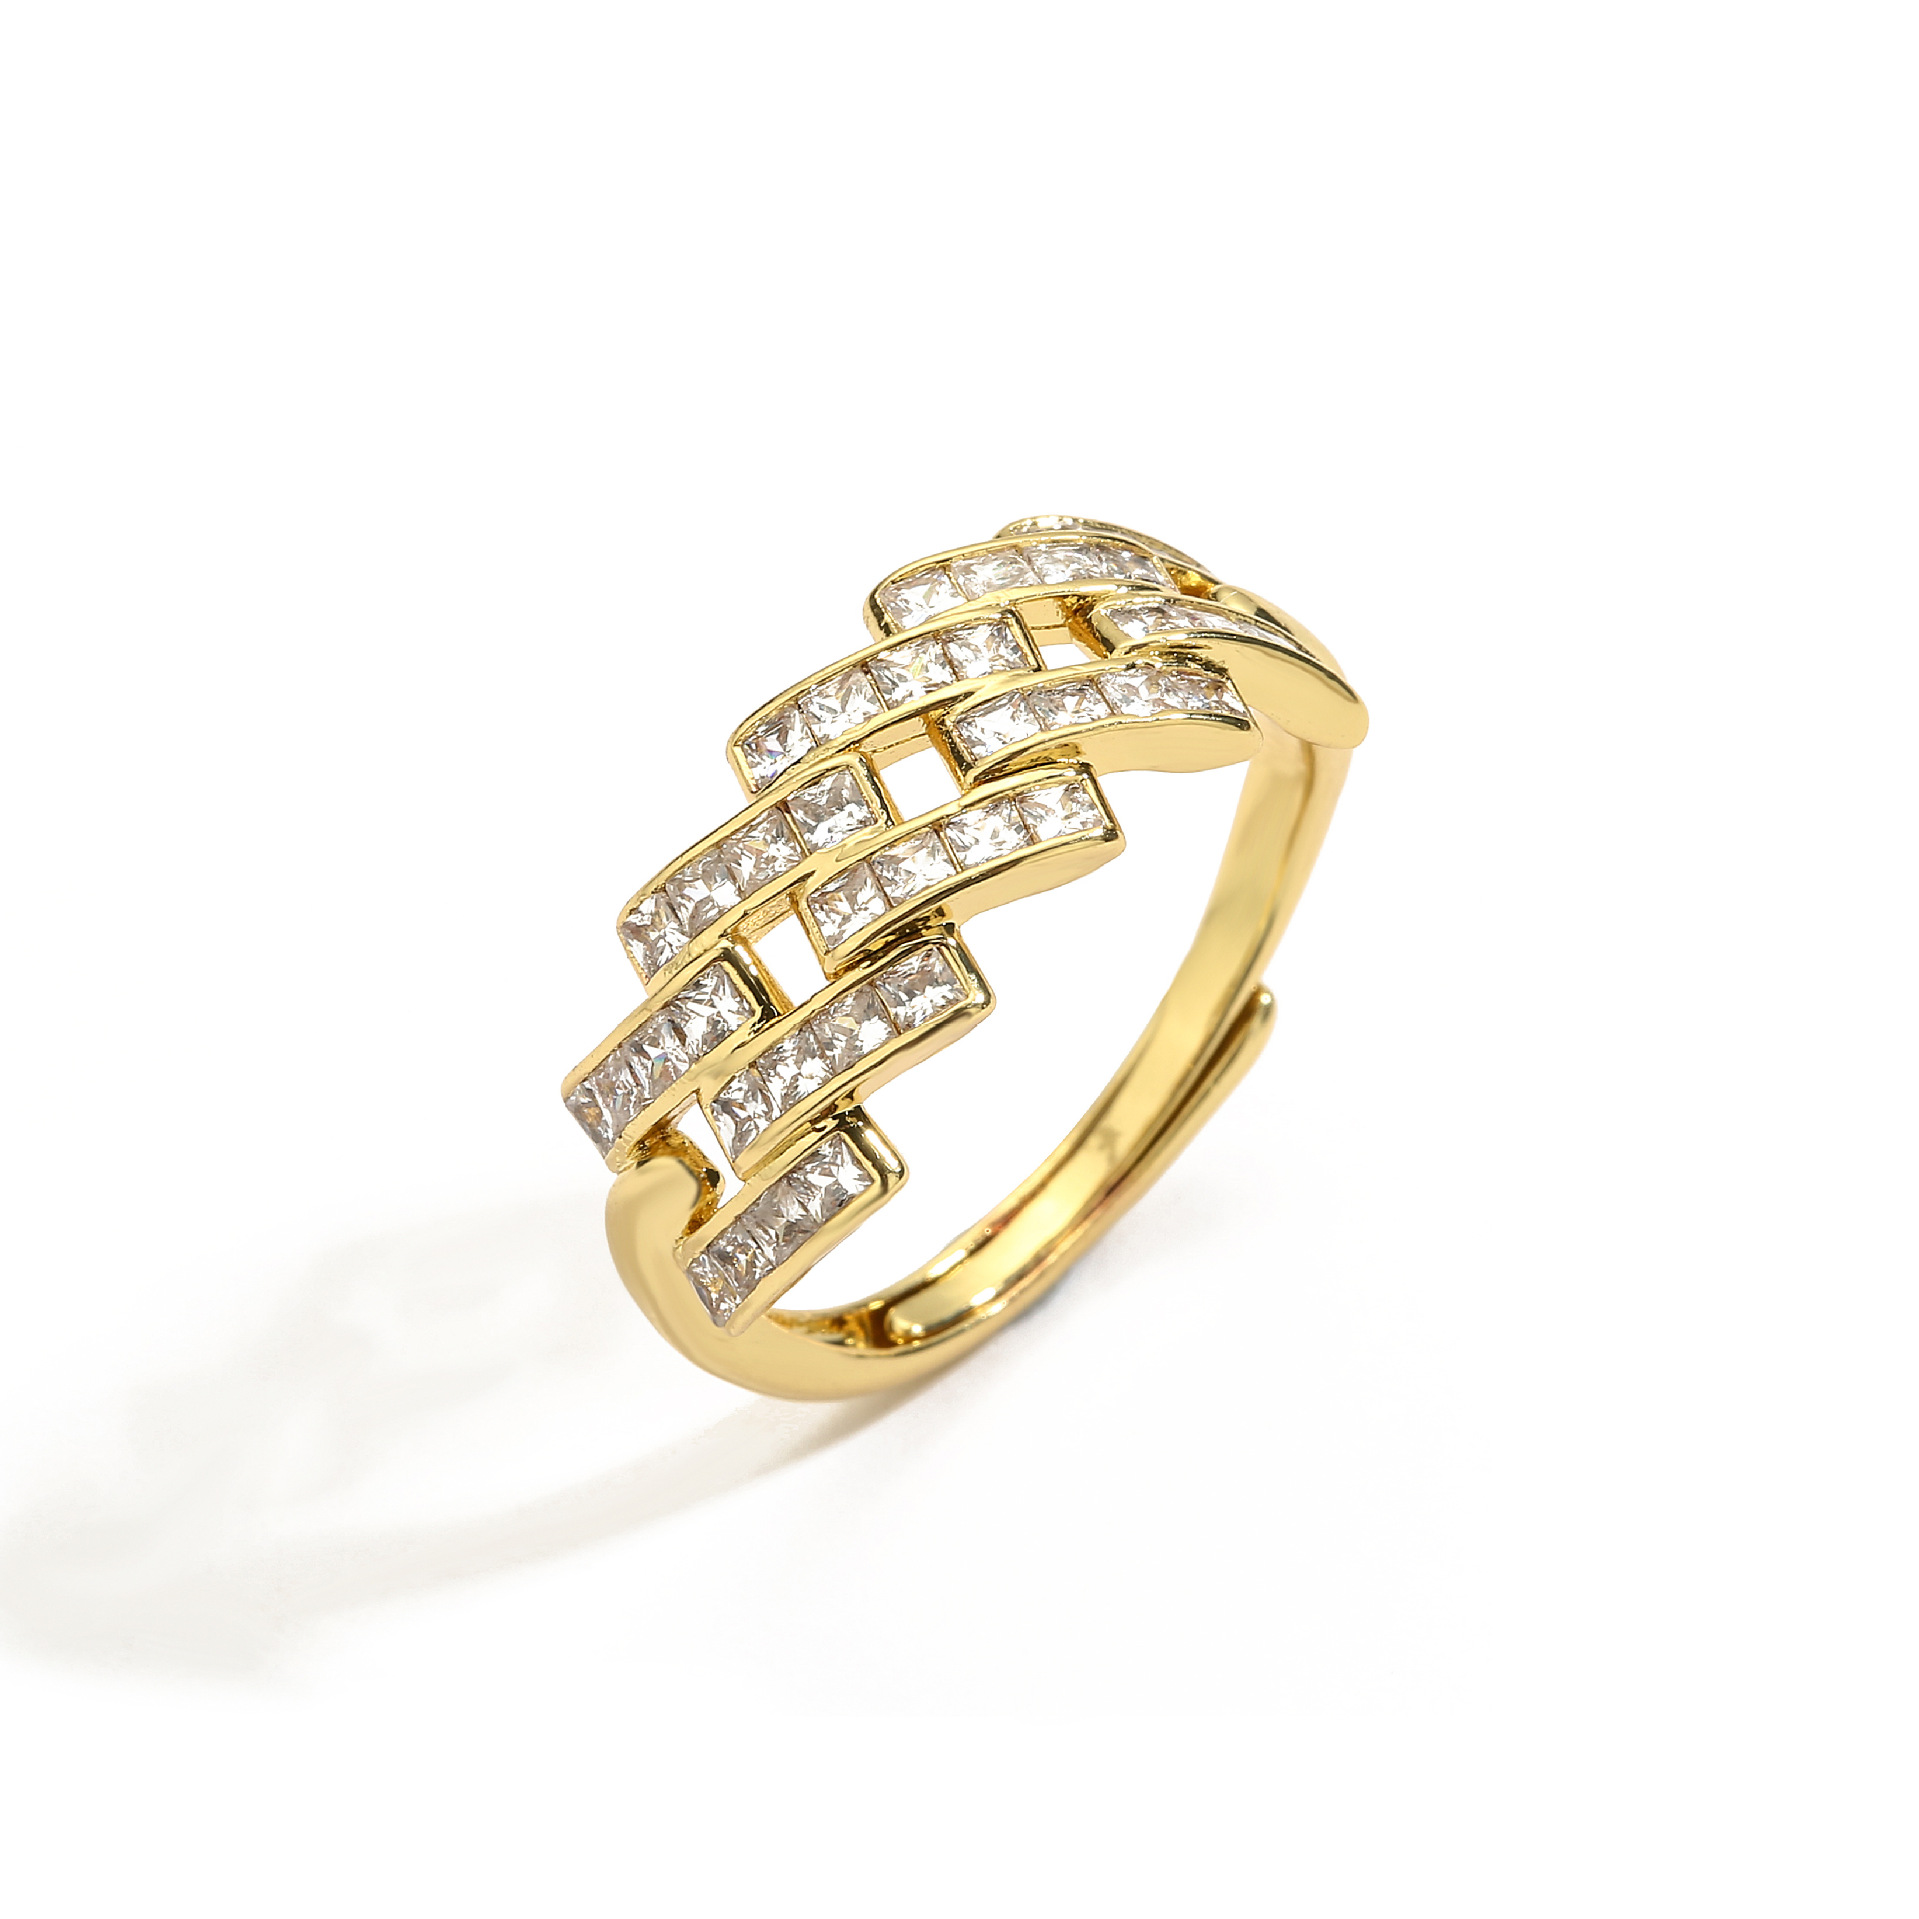 1:Gold Ring